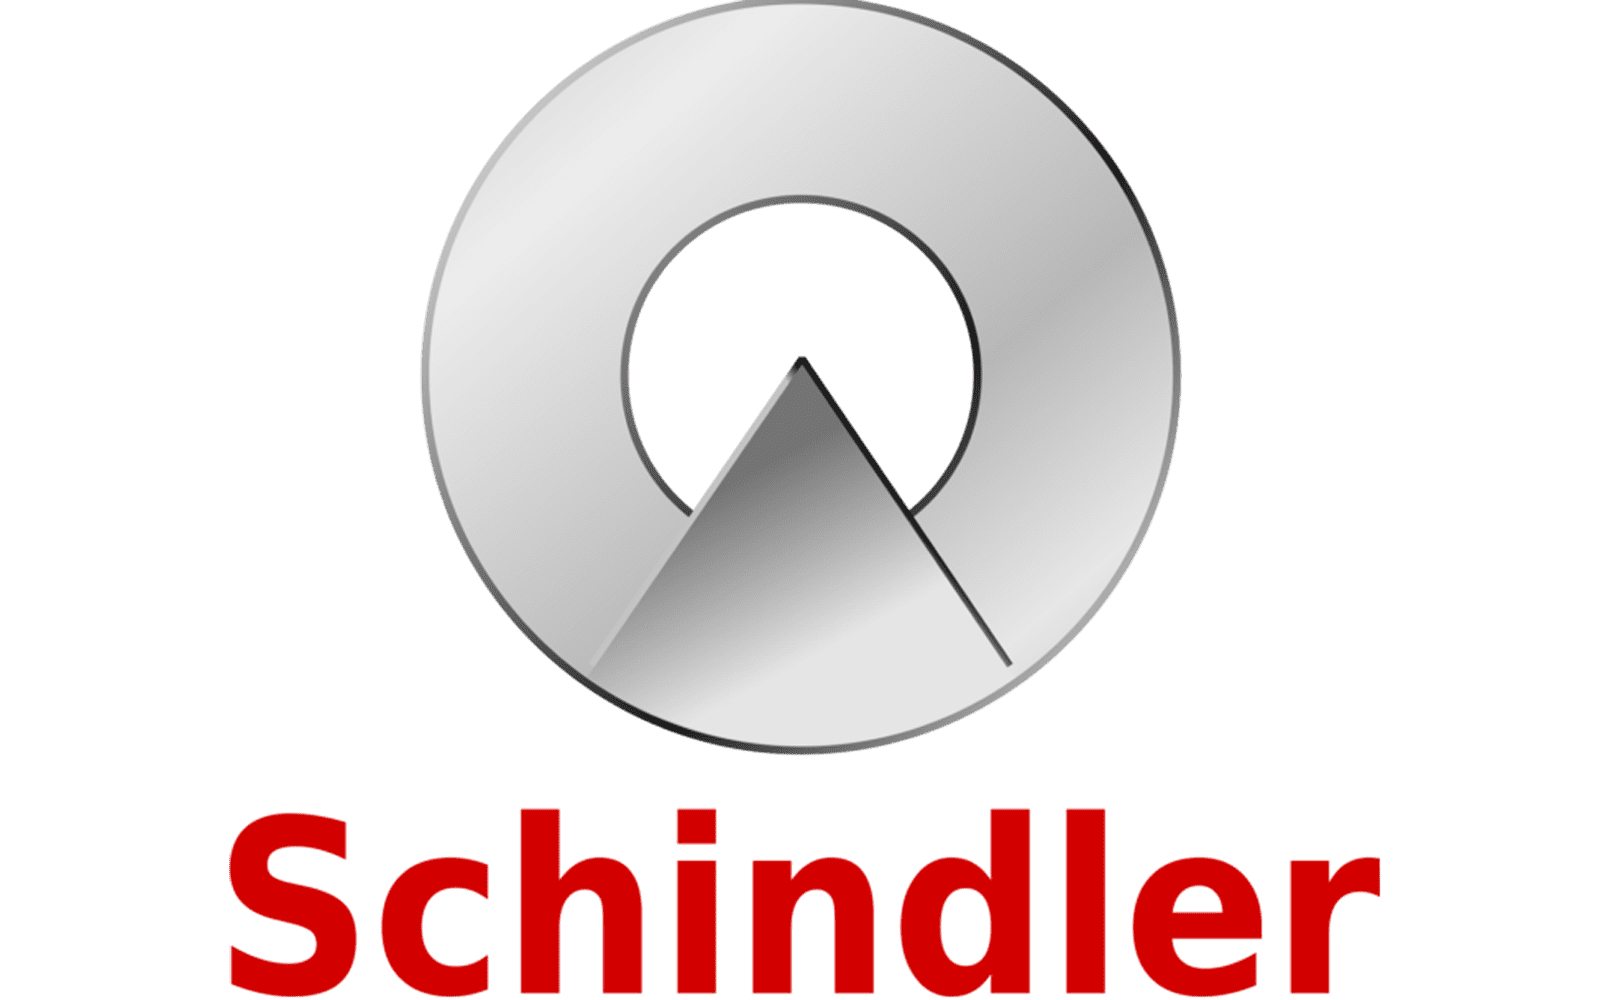 Schindler Lifts Singapore Pte Ltd. introduces Schindler Ahead, its smart  urban mobility platform, to Singapore | Jardine Schindler Hong Kong